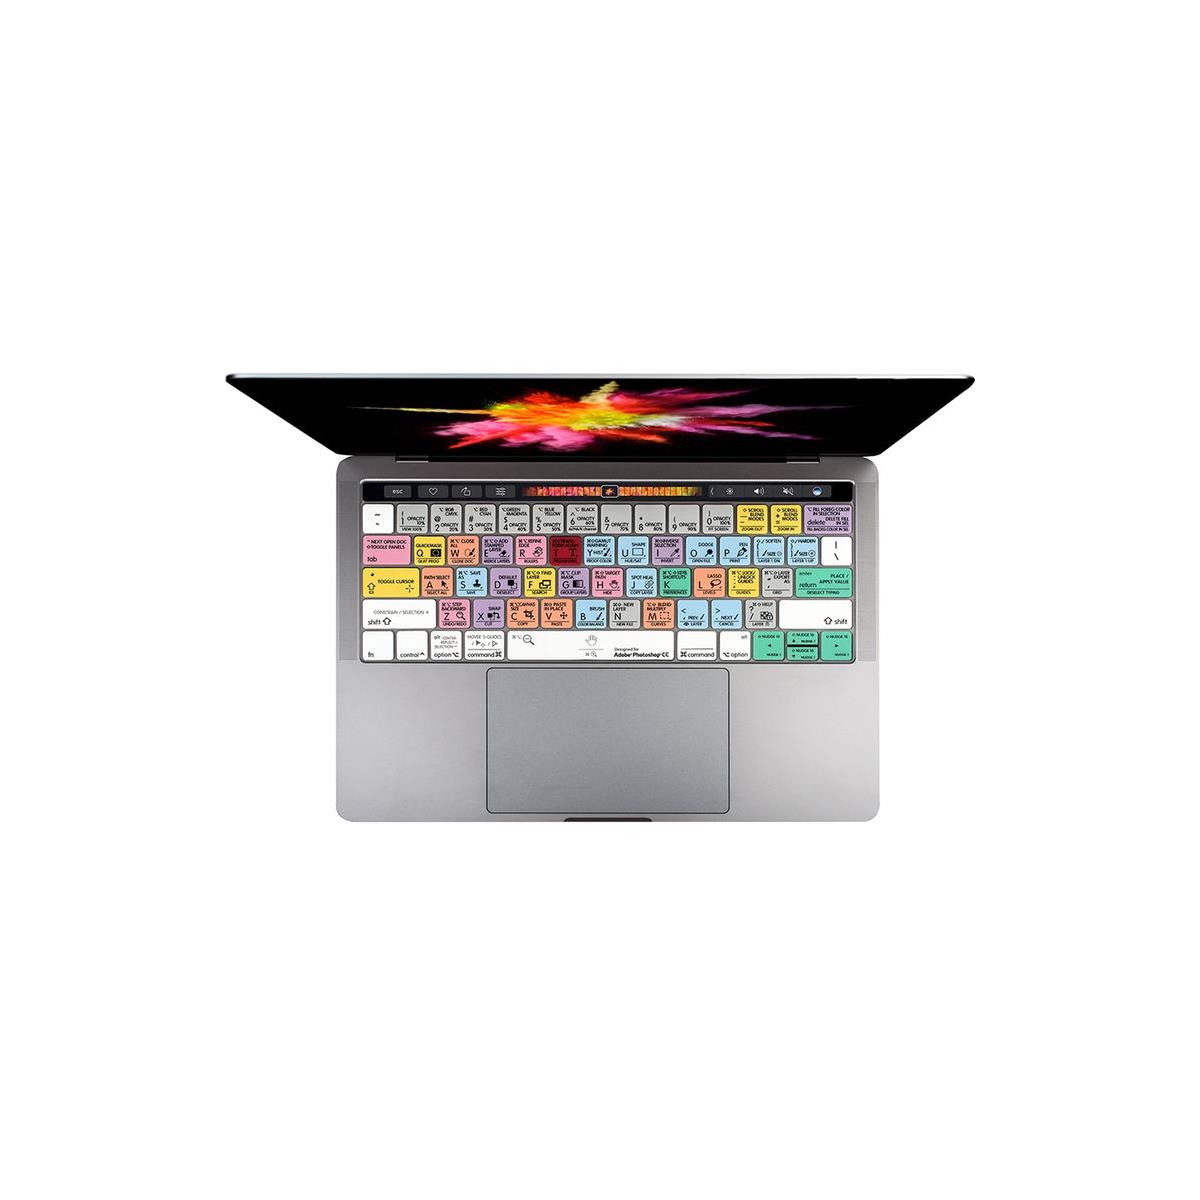 Image of LogicKeyboard Keyboard Skin Cover for Adobe Photoshop CC Macbook Pro Keyboard